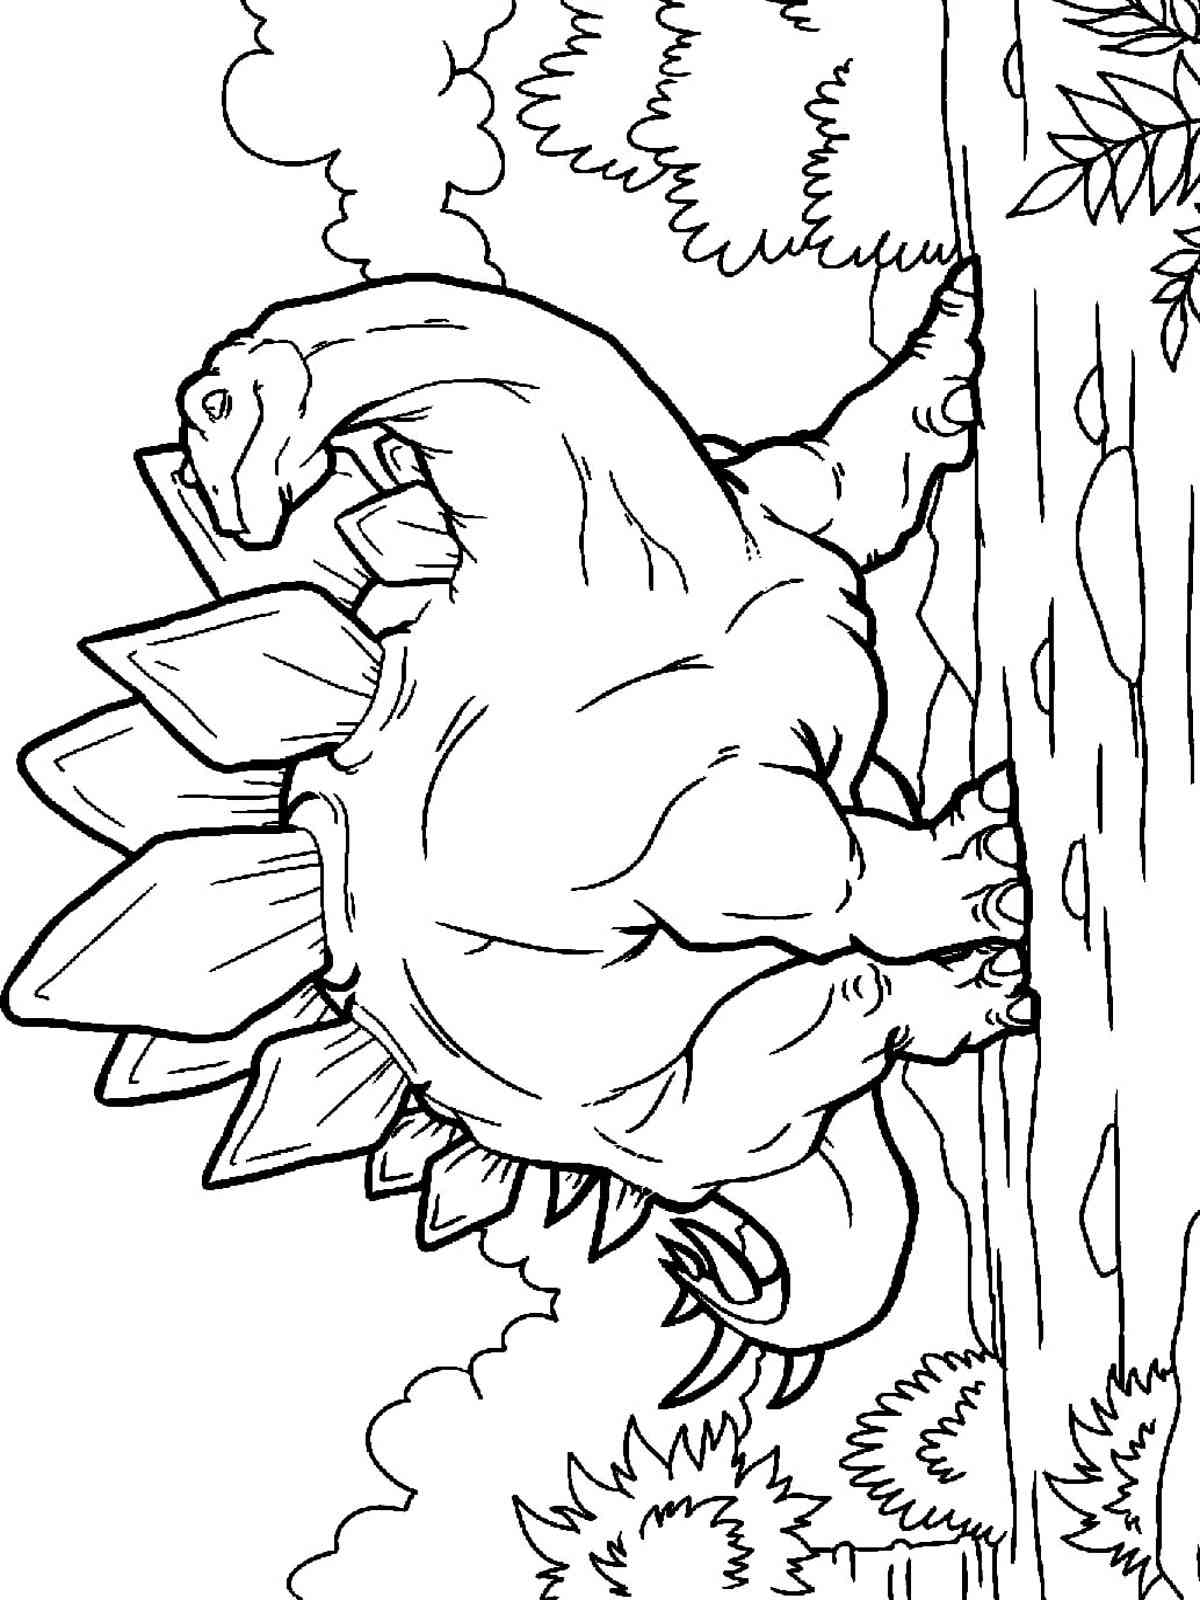 Huge Stegosaurus coloring page